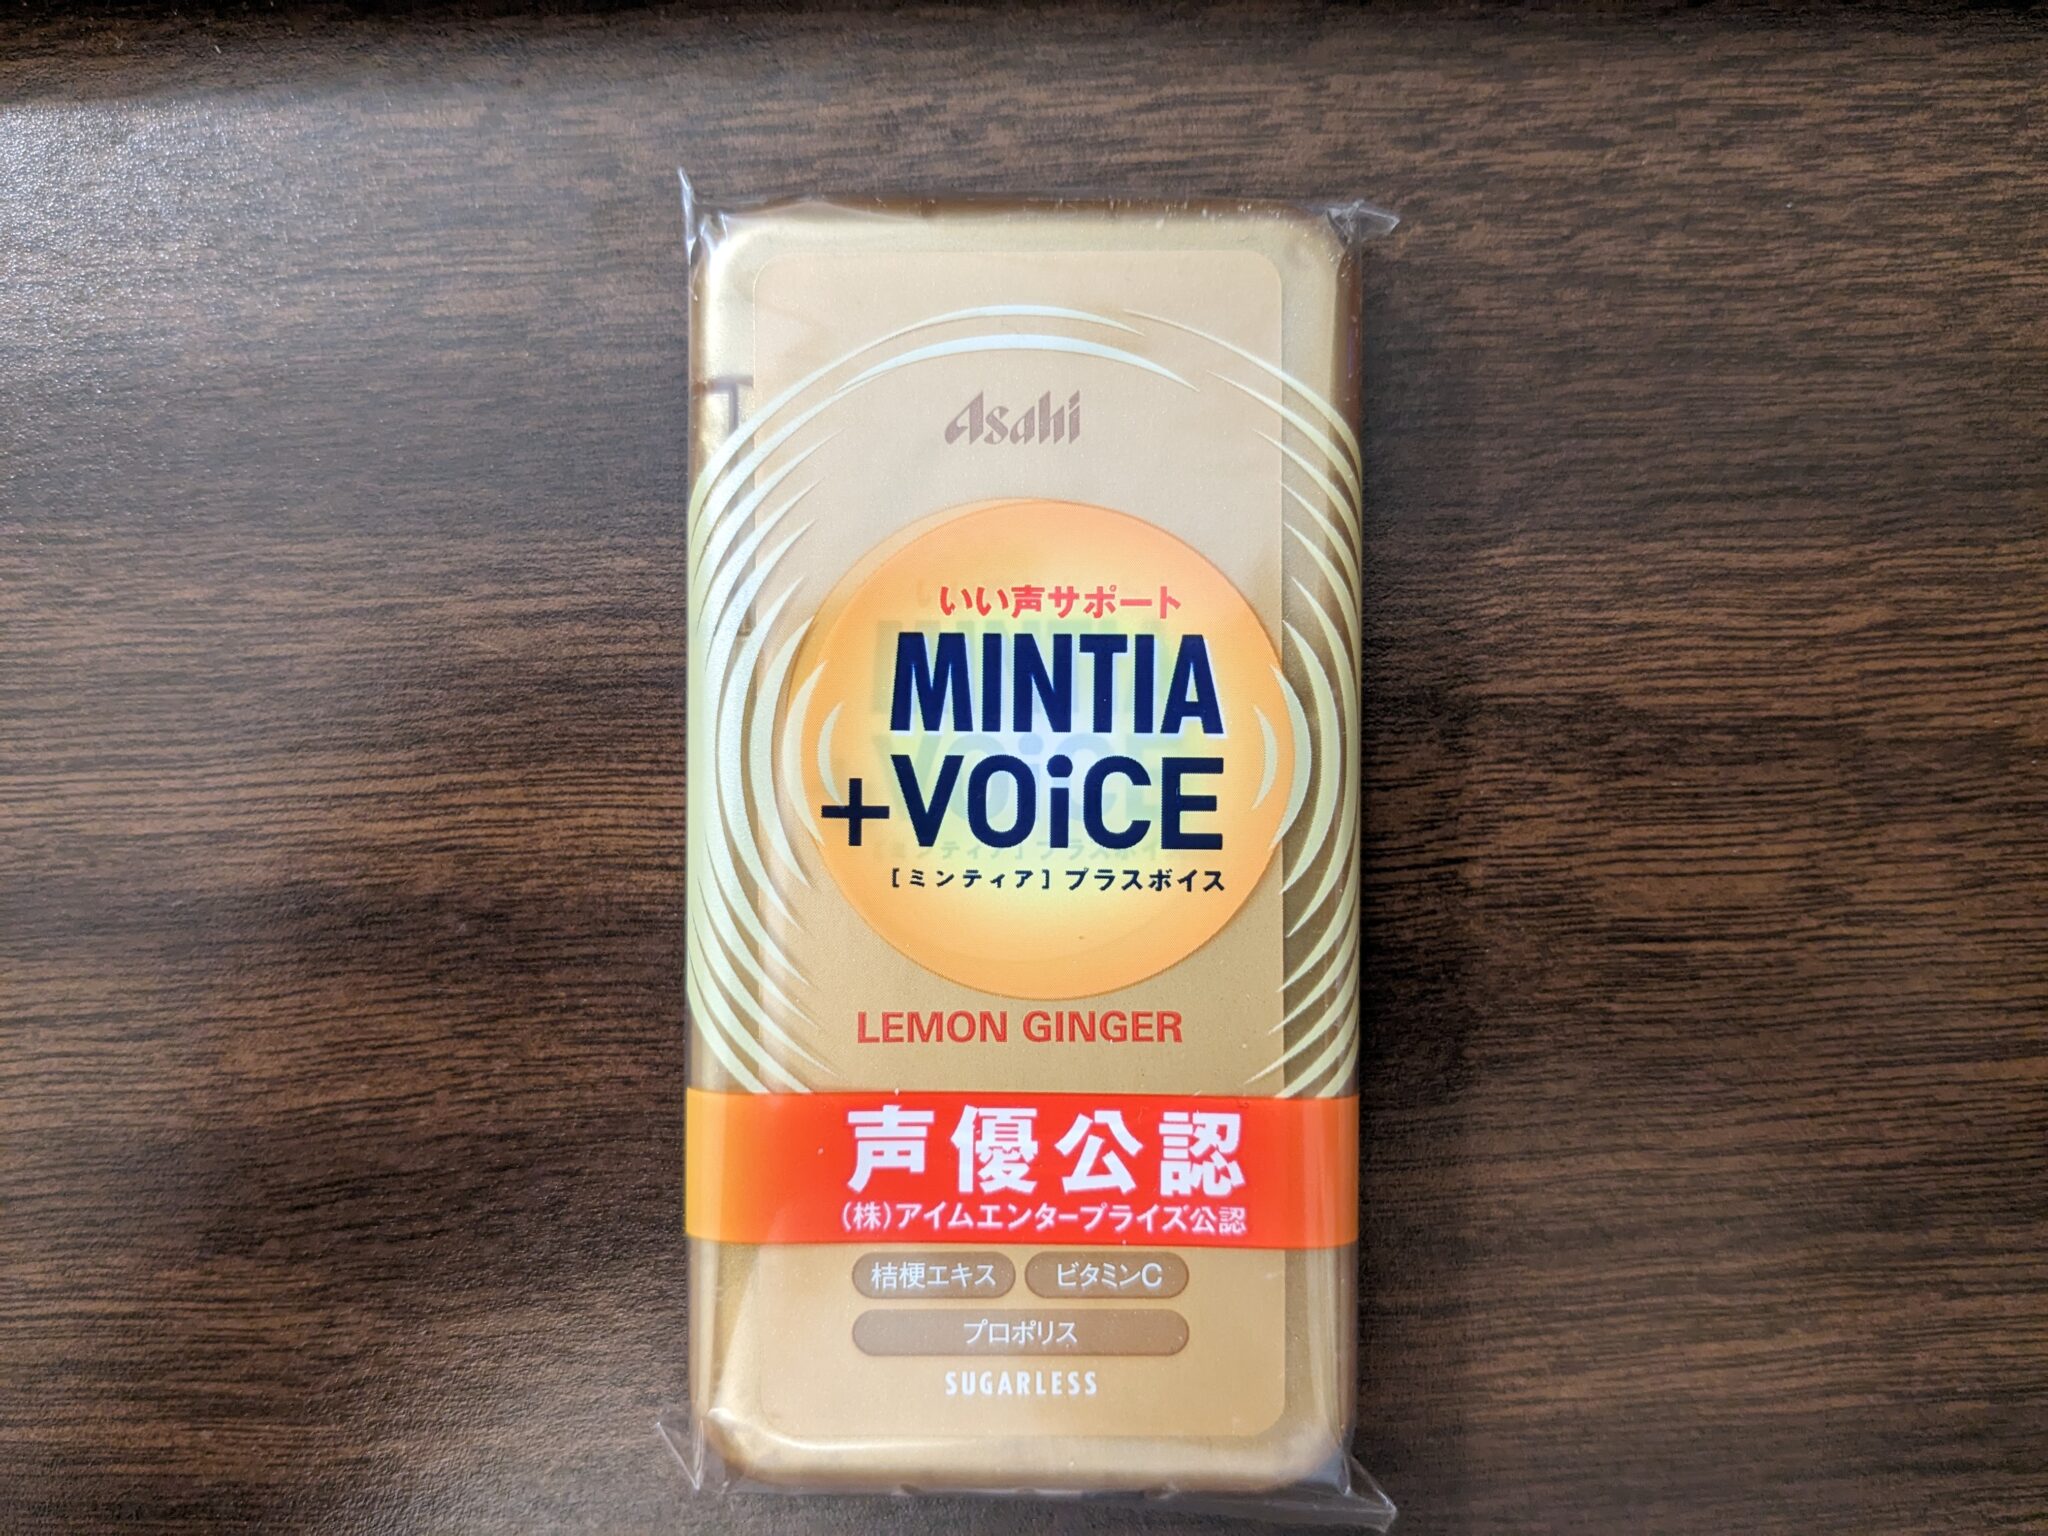 Mintia Voice – Lemon Ginger